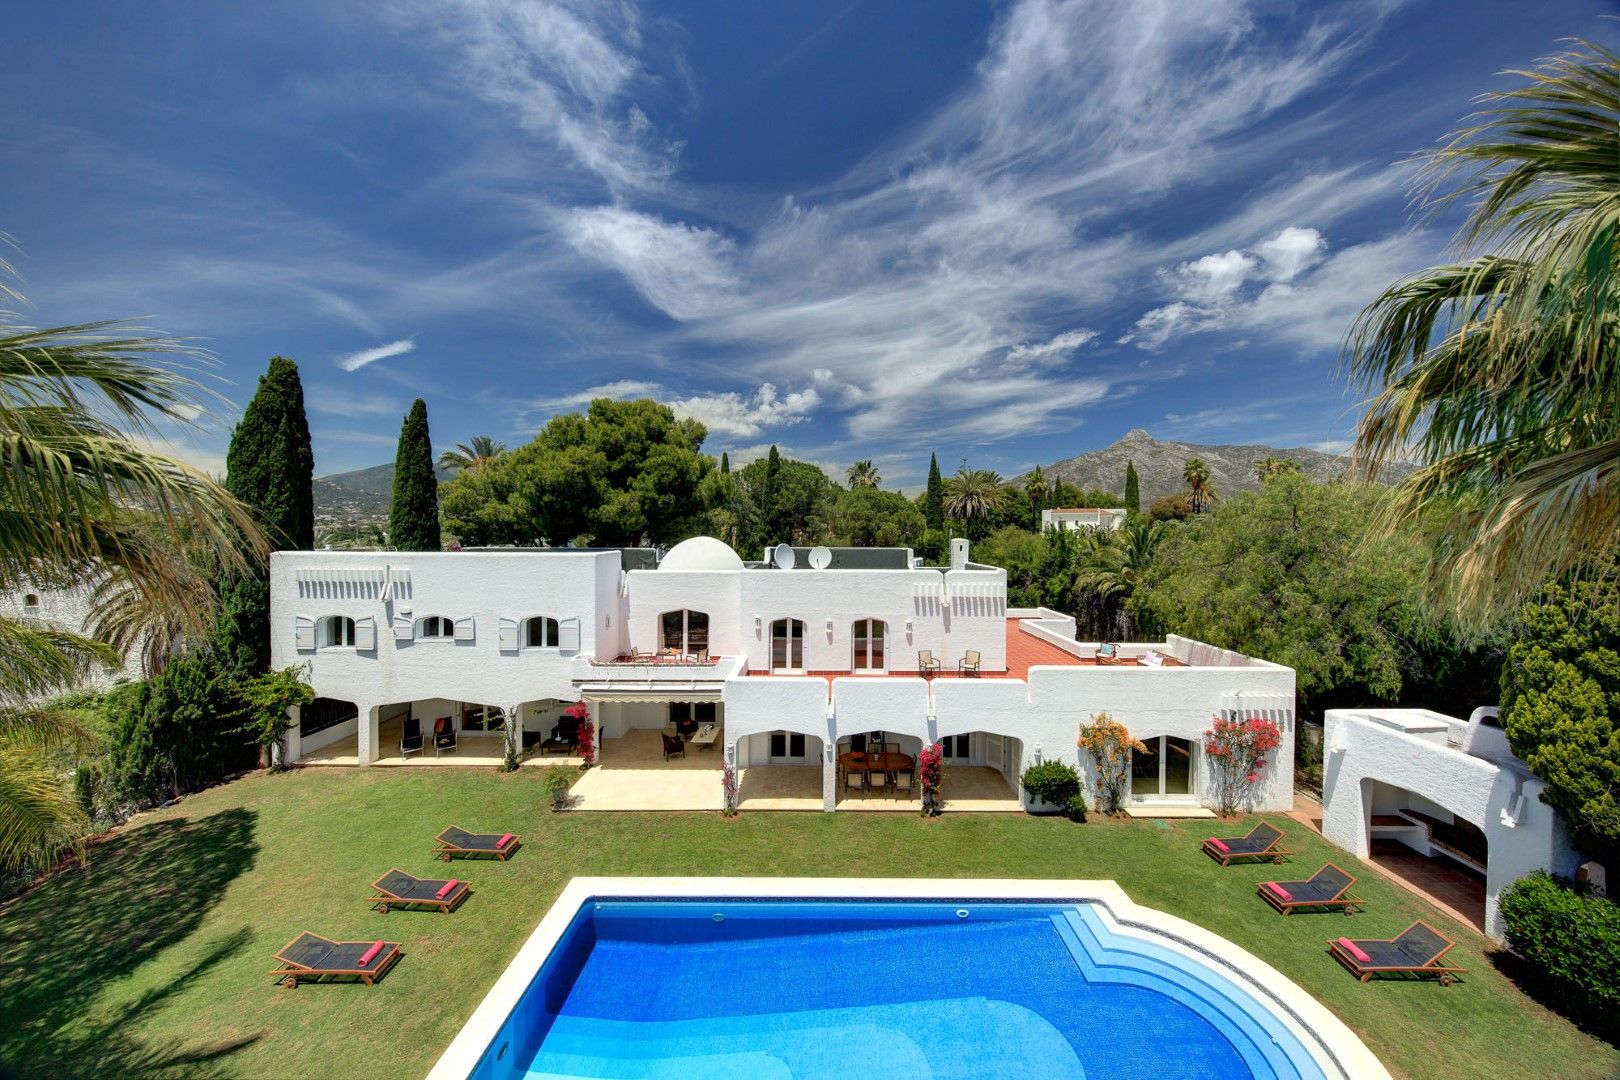 Picturesque villa nestled in tropical gardens | Engel & Völkers Marbella